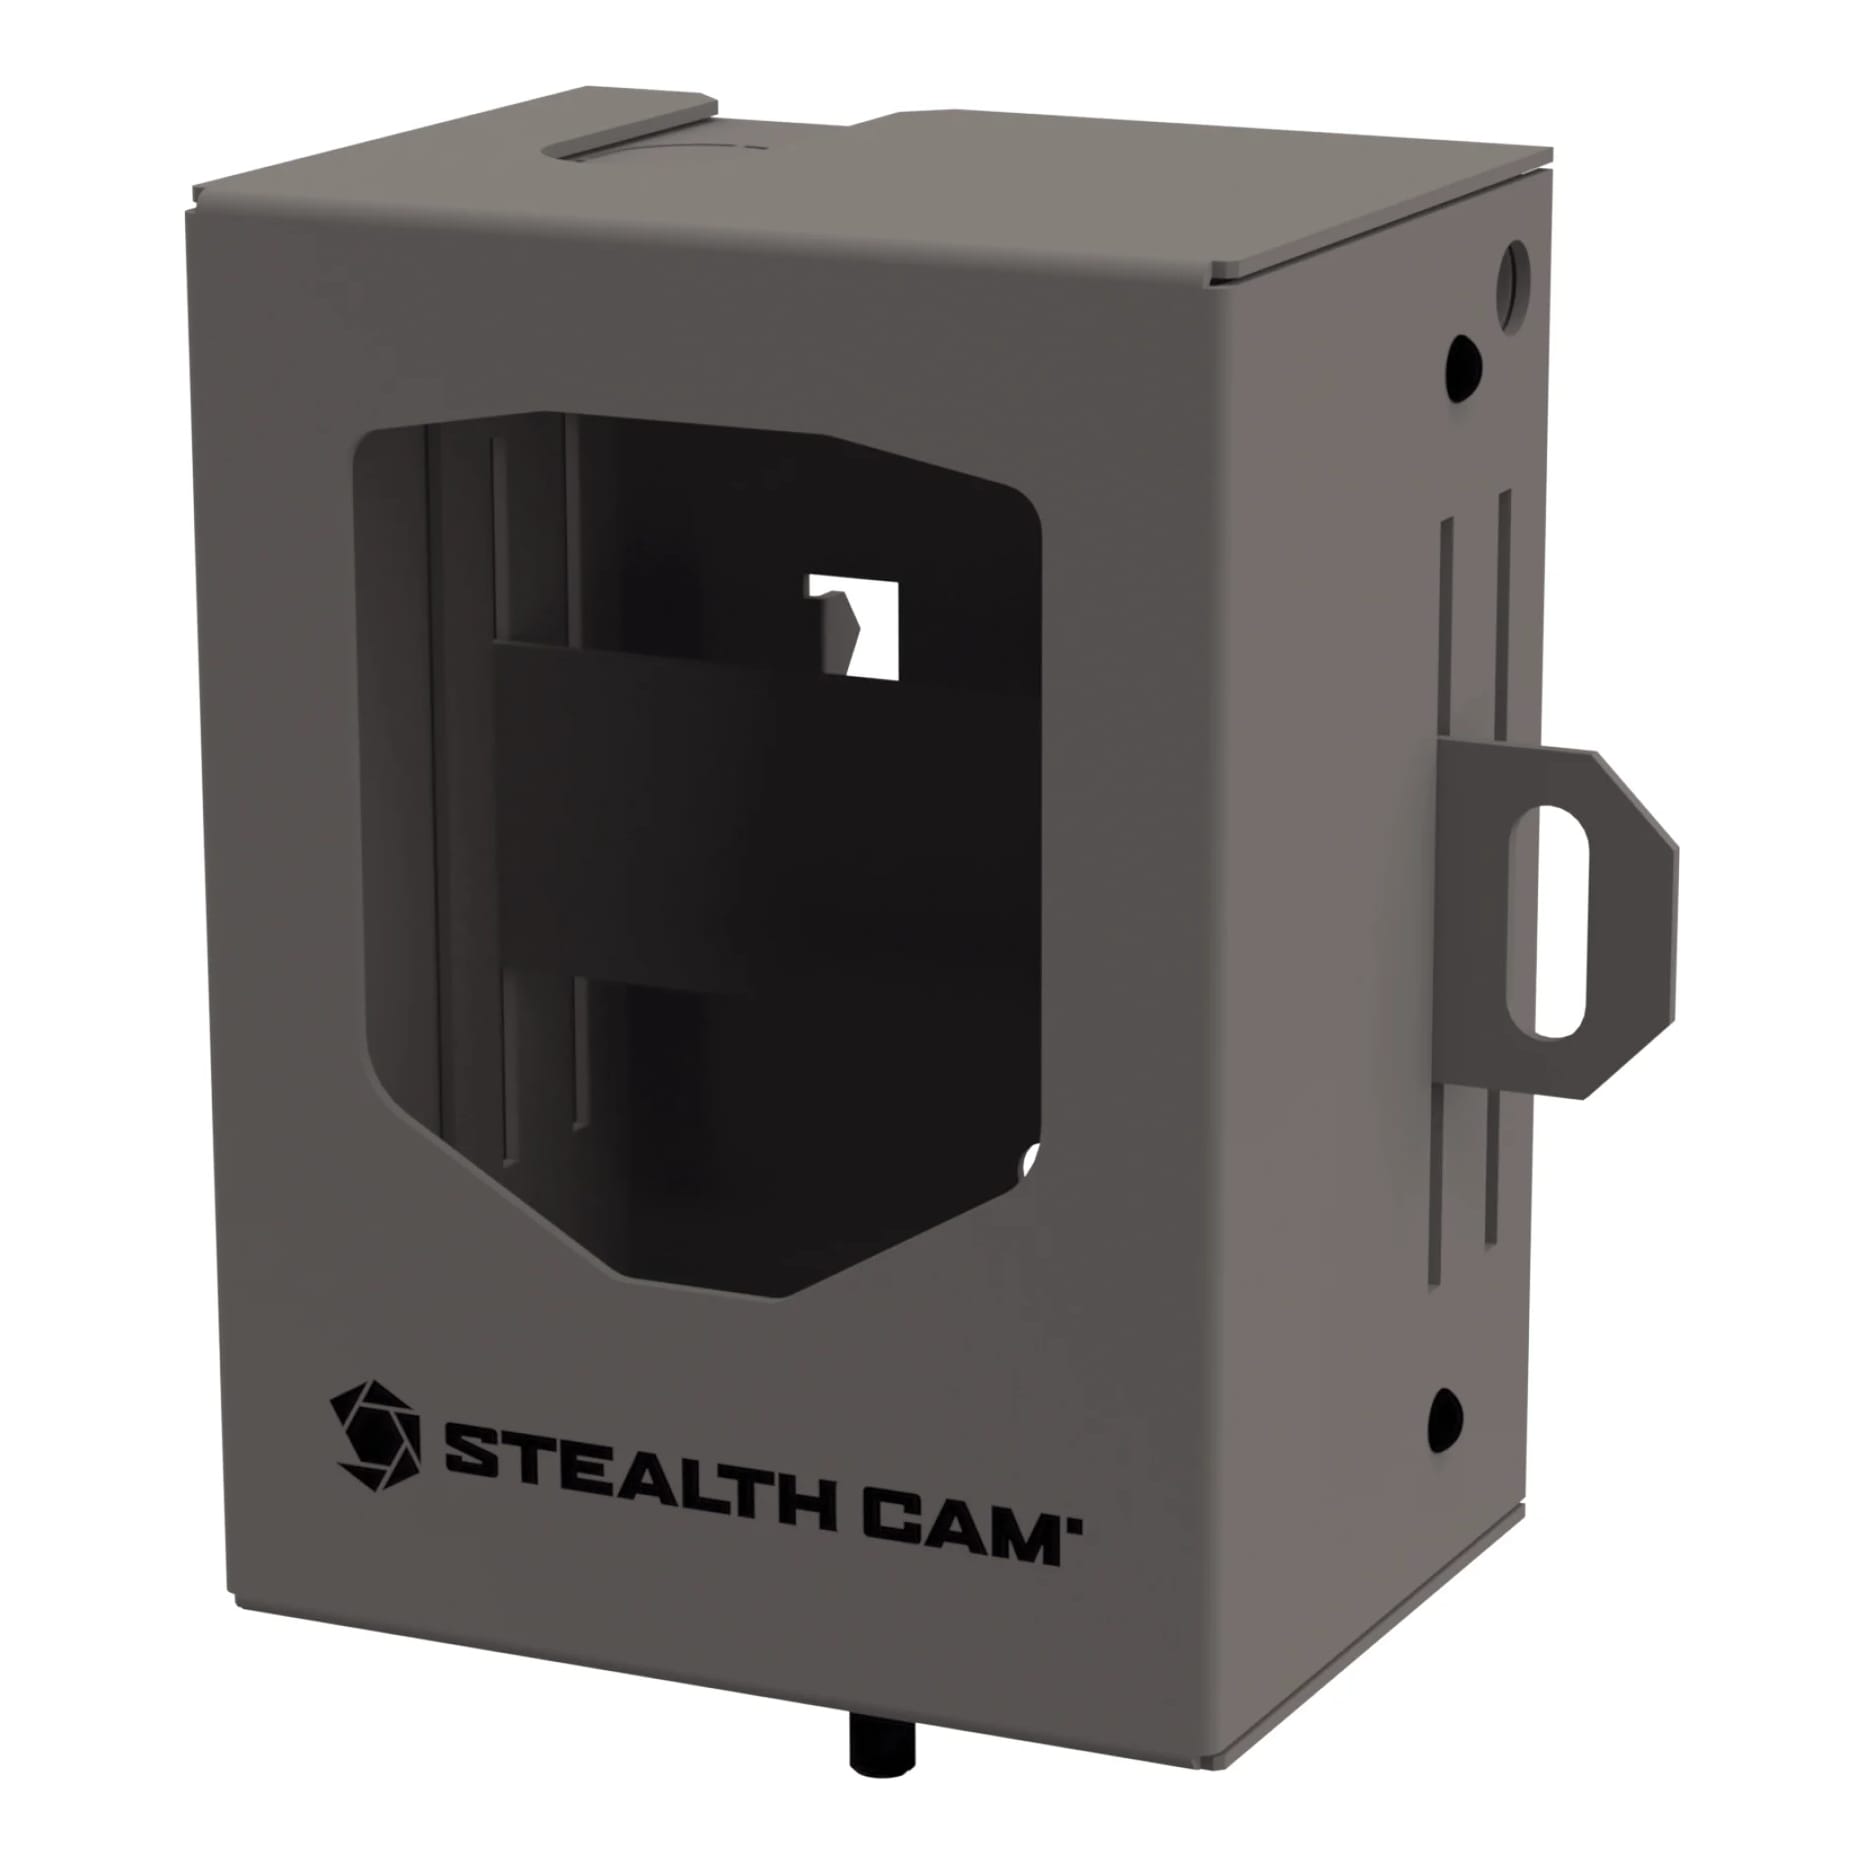 Stealth Cam Bear Security Boxes - Cabelas - STEALTHCAM - Trail